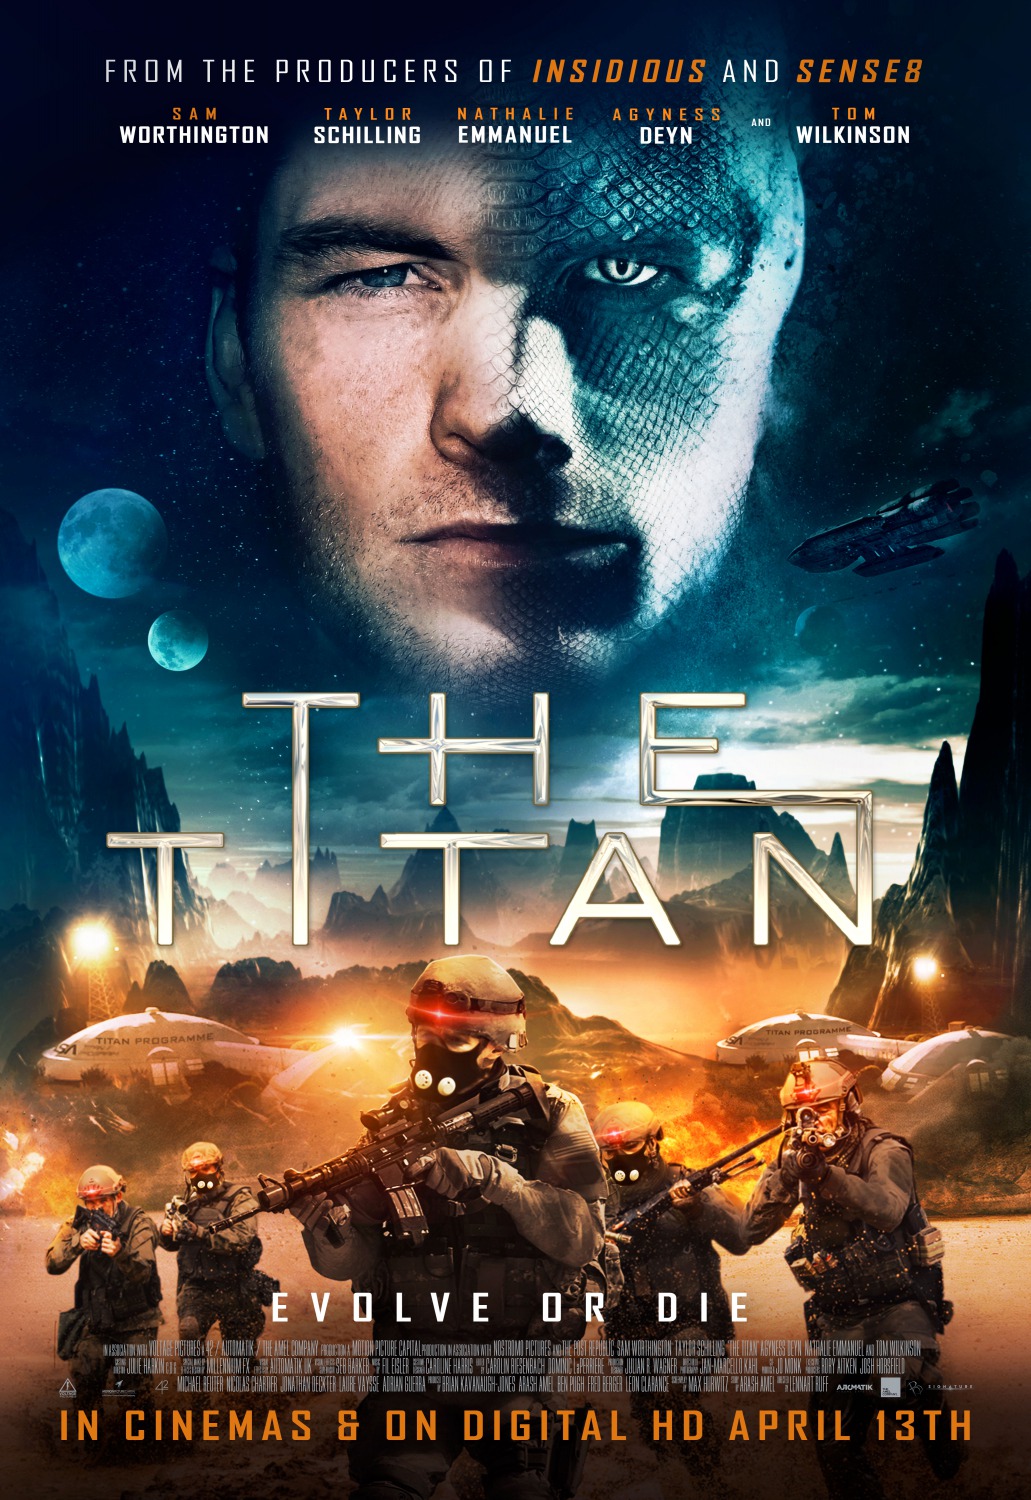 titan-movie-poster.jpg